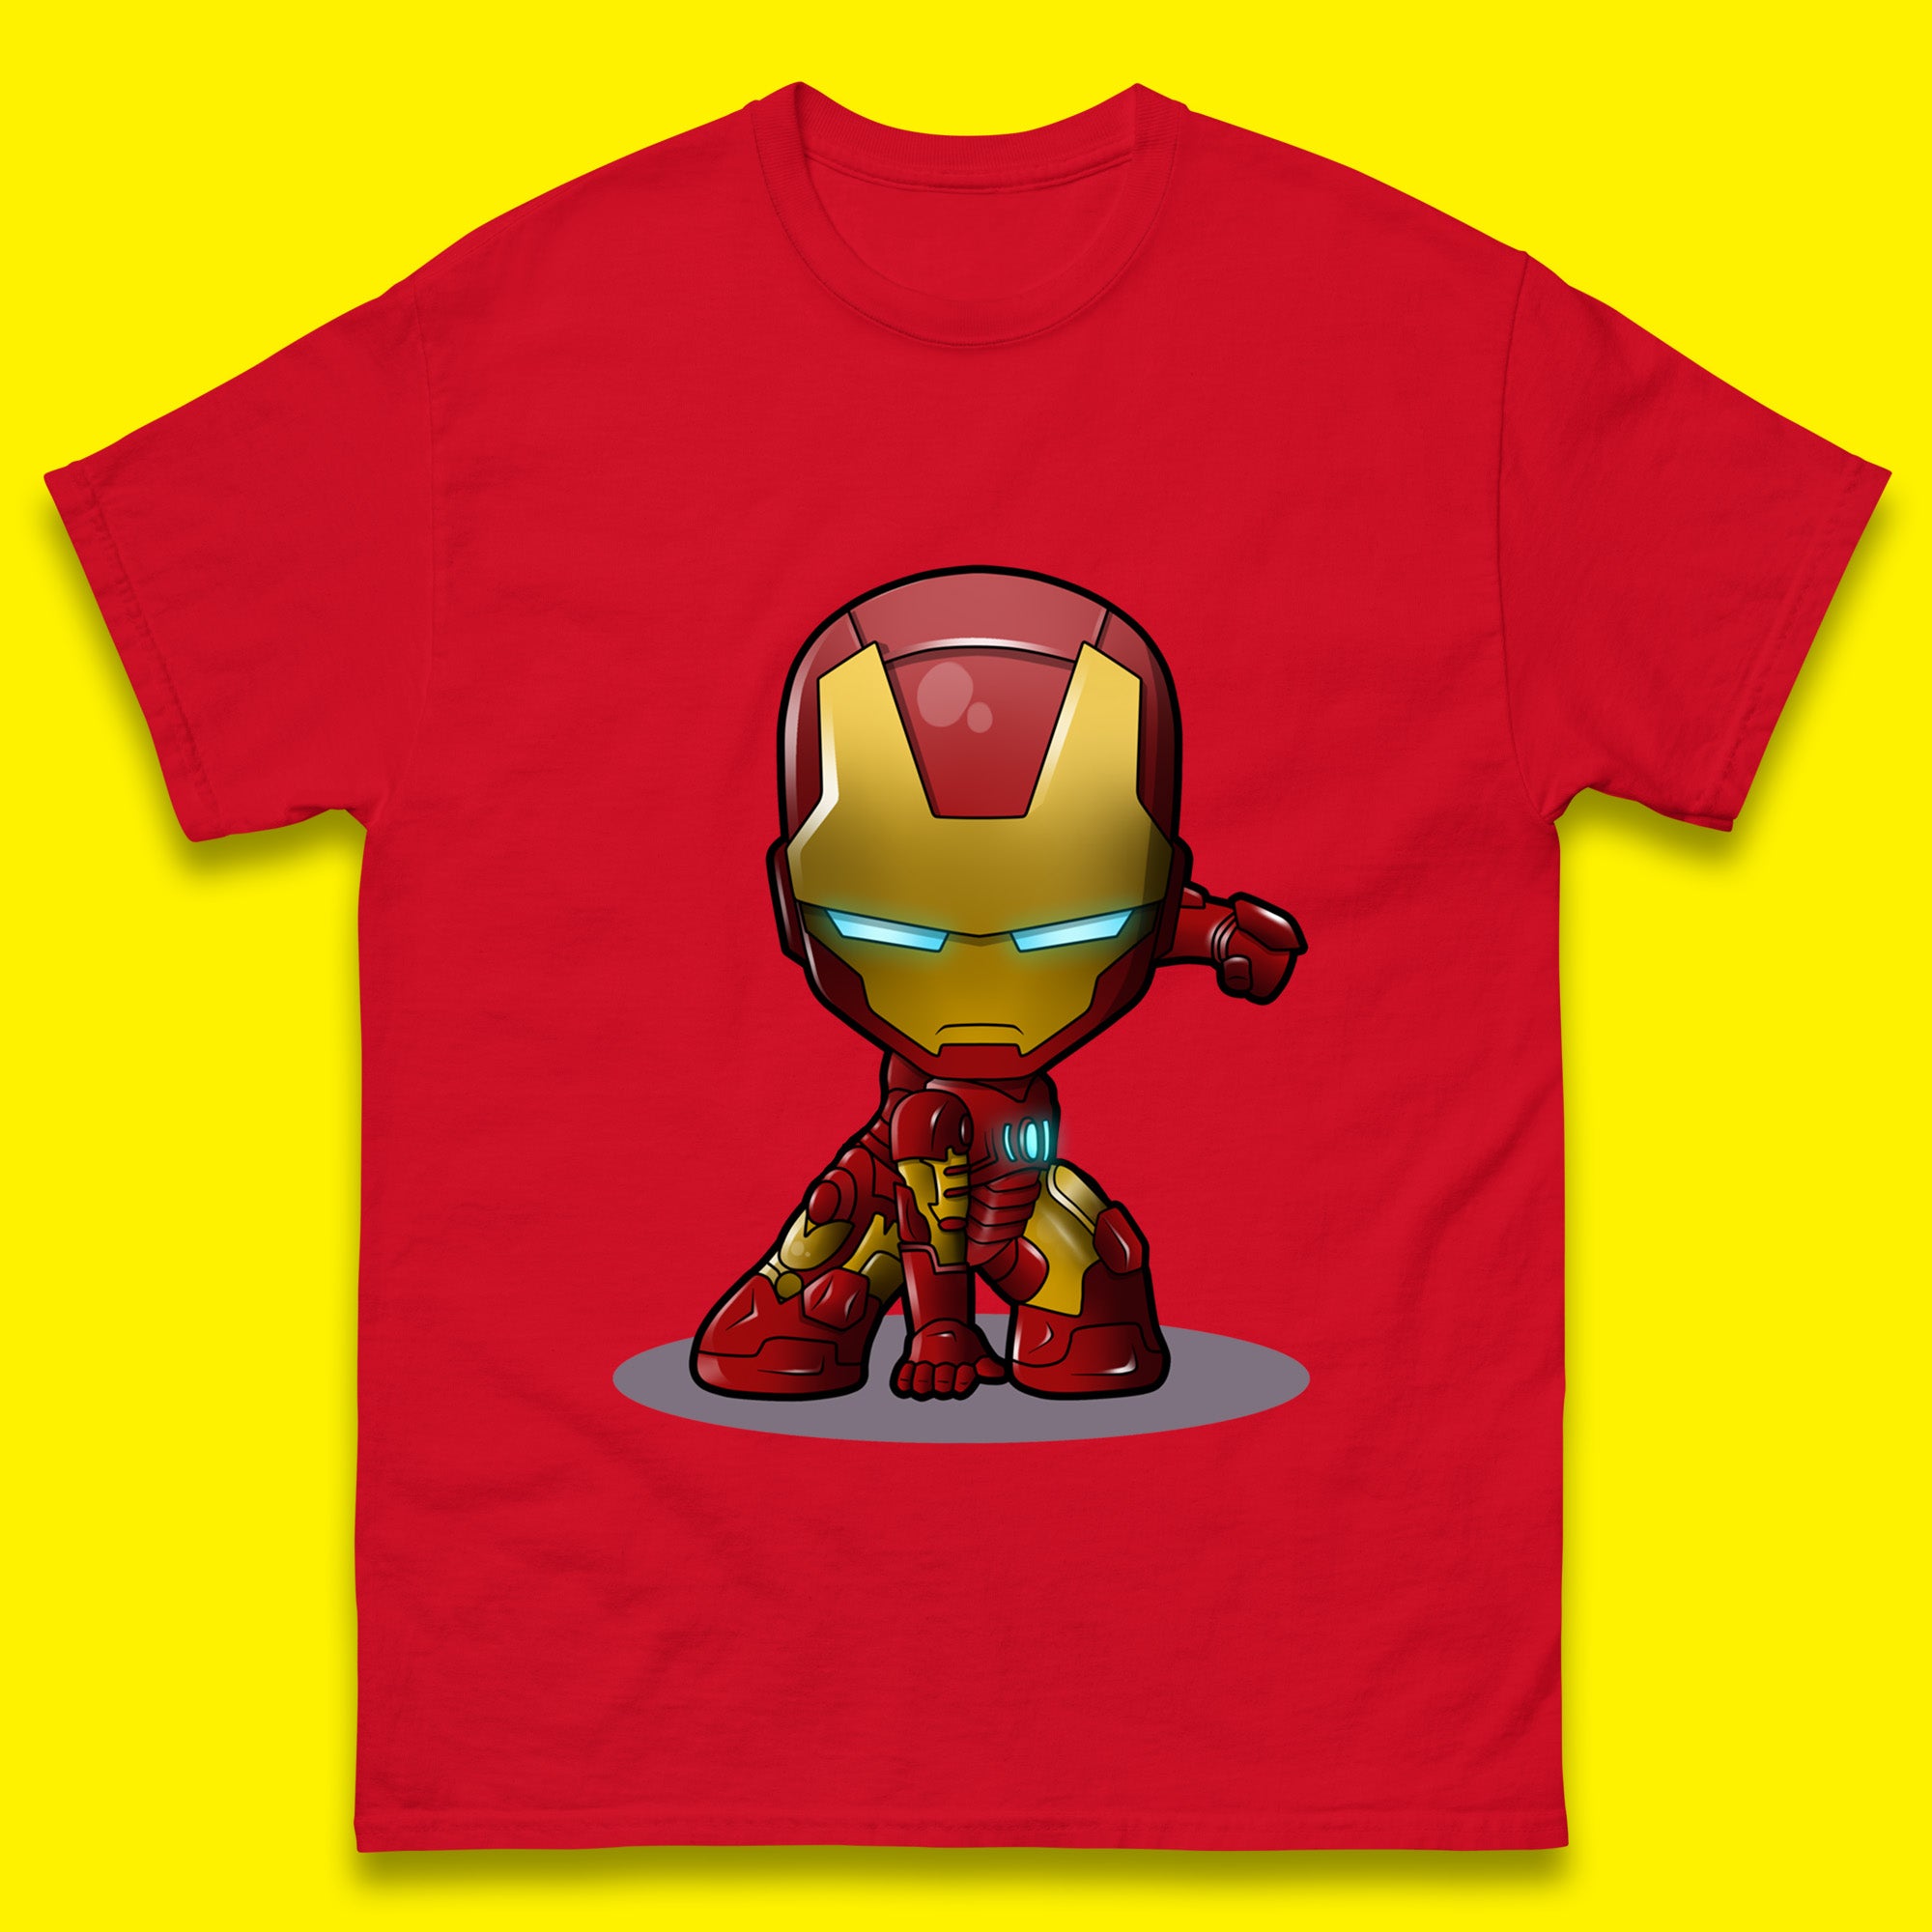 Marvel Avenger Iron Man Movie Character Ironman Costume Superhero Marvel Comics Mens Tee Top